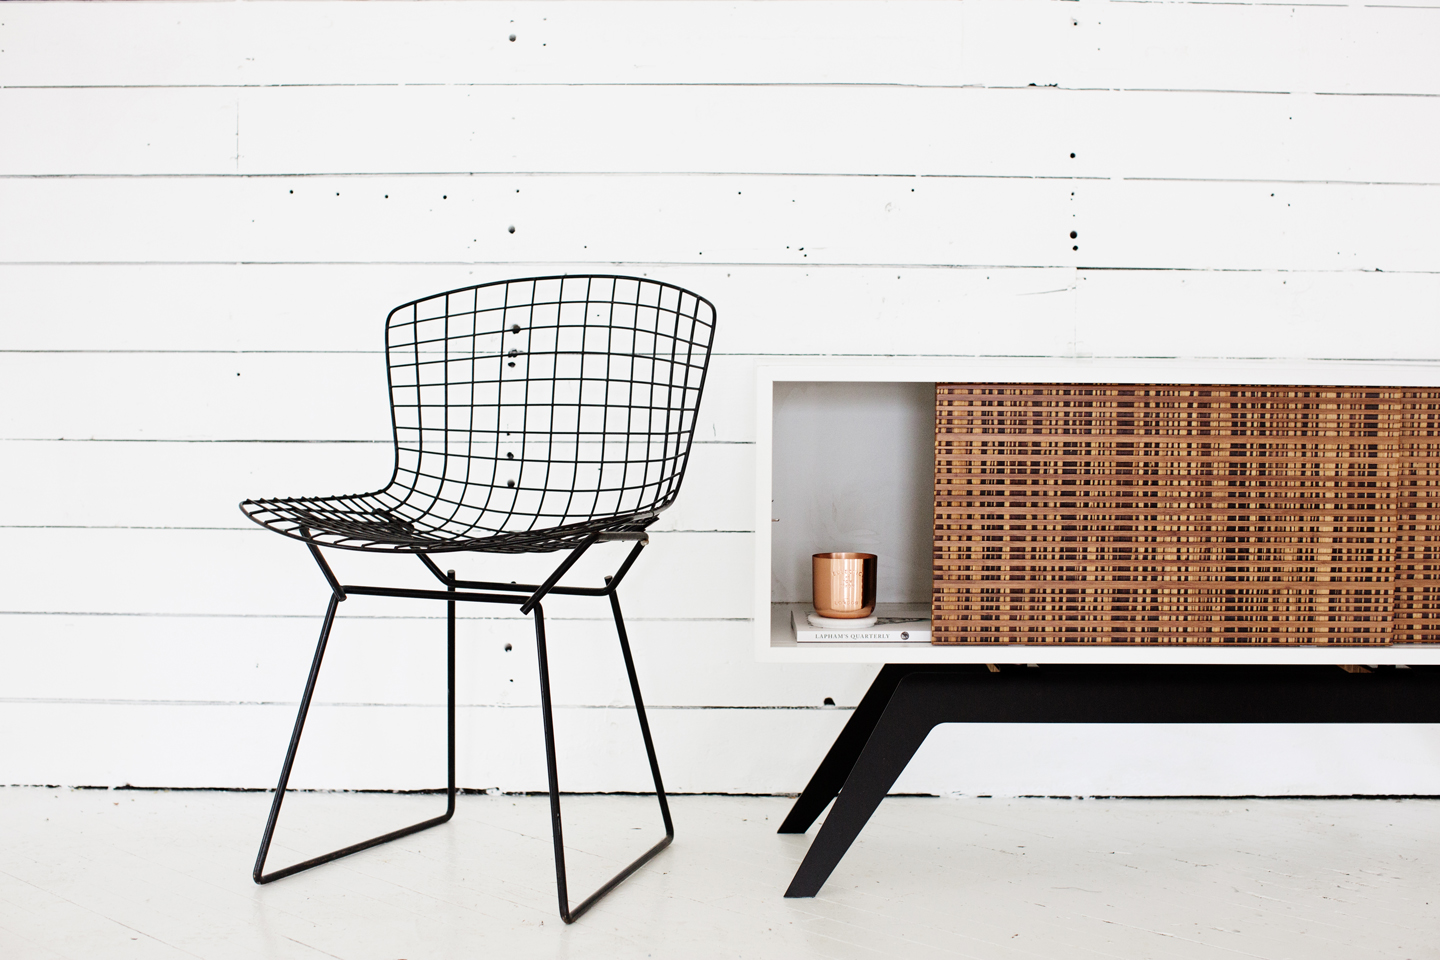   Eastvold Furniture.    Art Direction &amp; Styling by  Bodega, Ltd.  